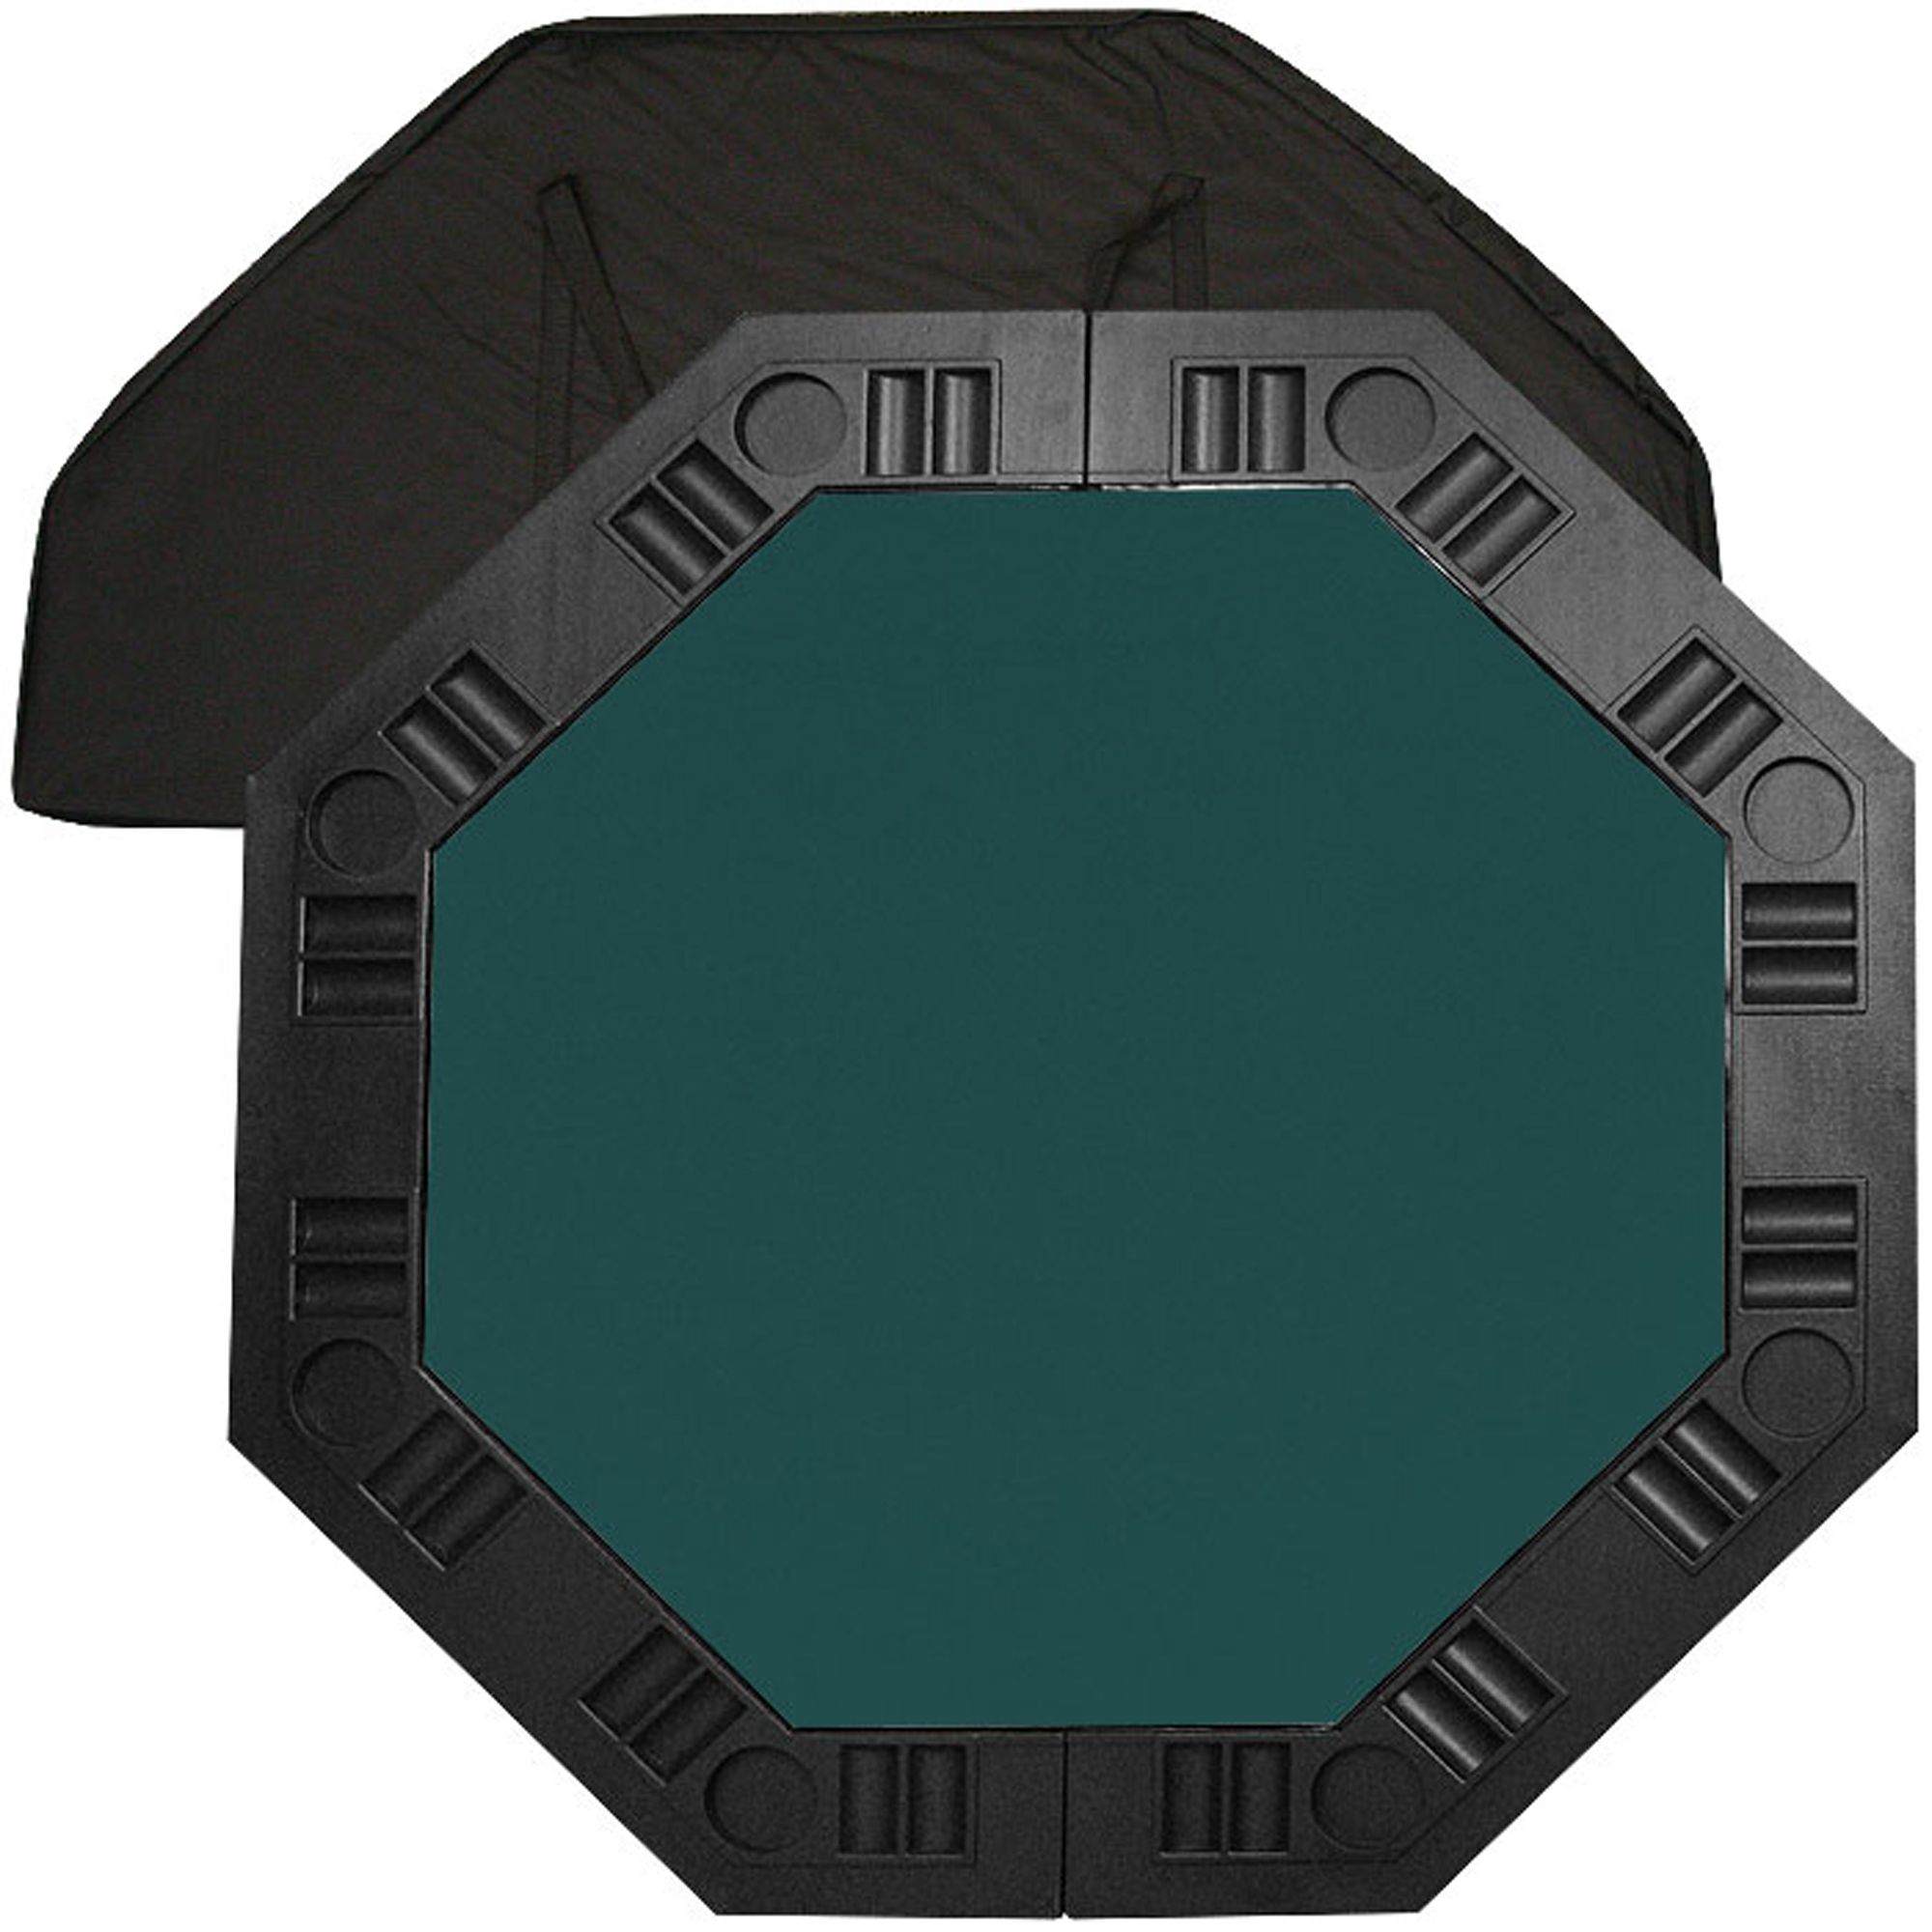 Trademark 8 Player Octagonal Table top - Dark Green - 48 inch